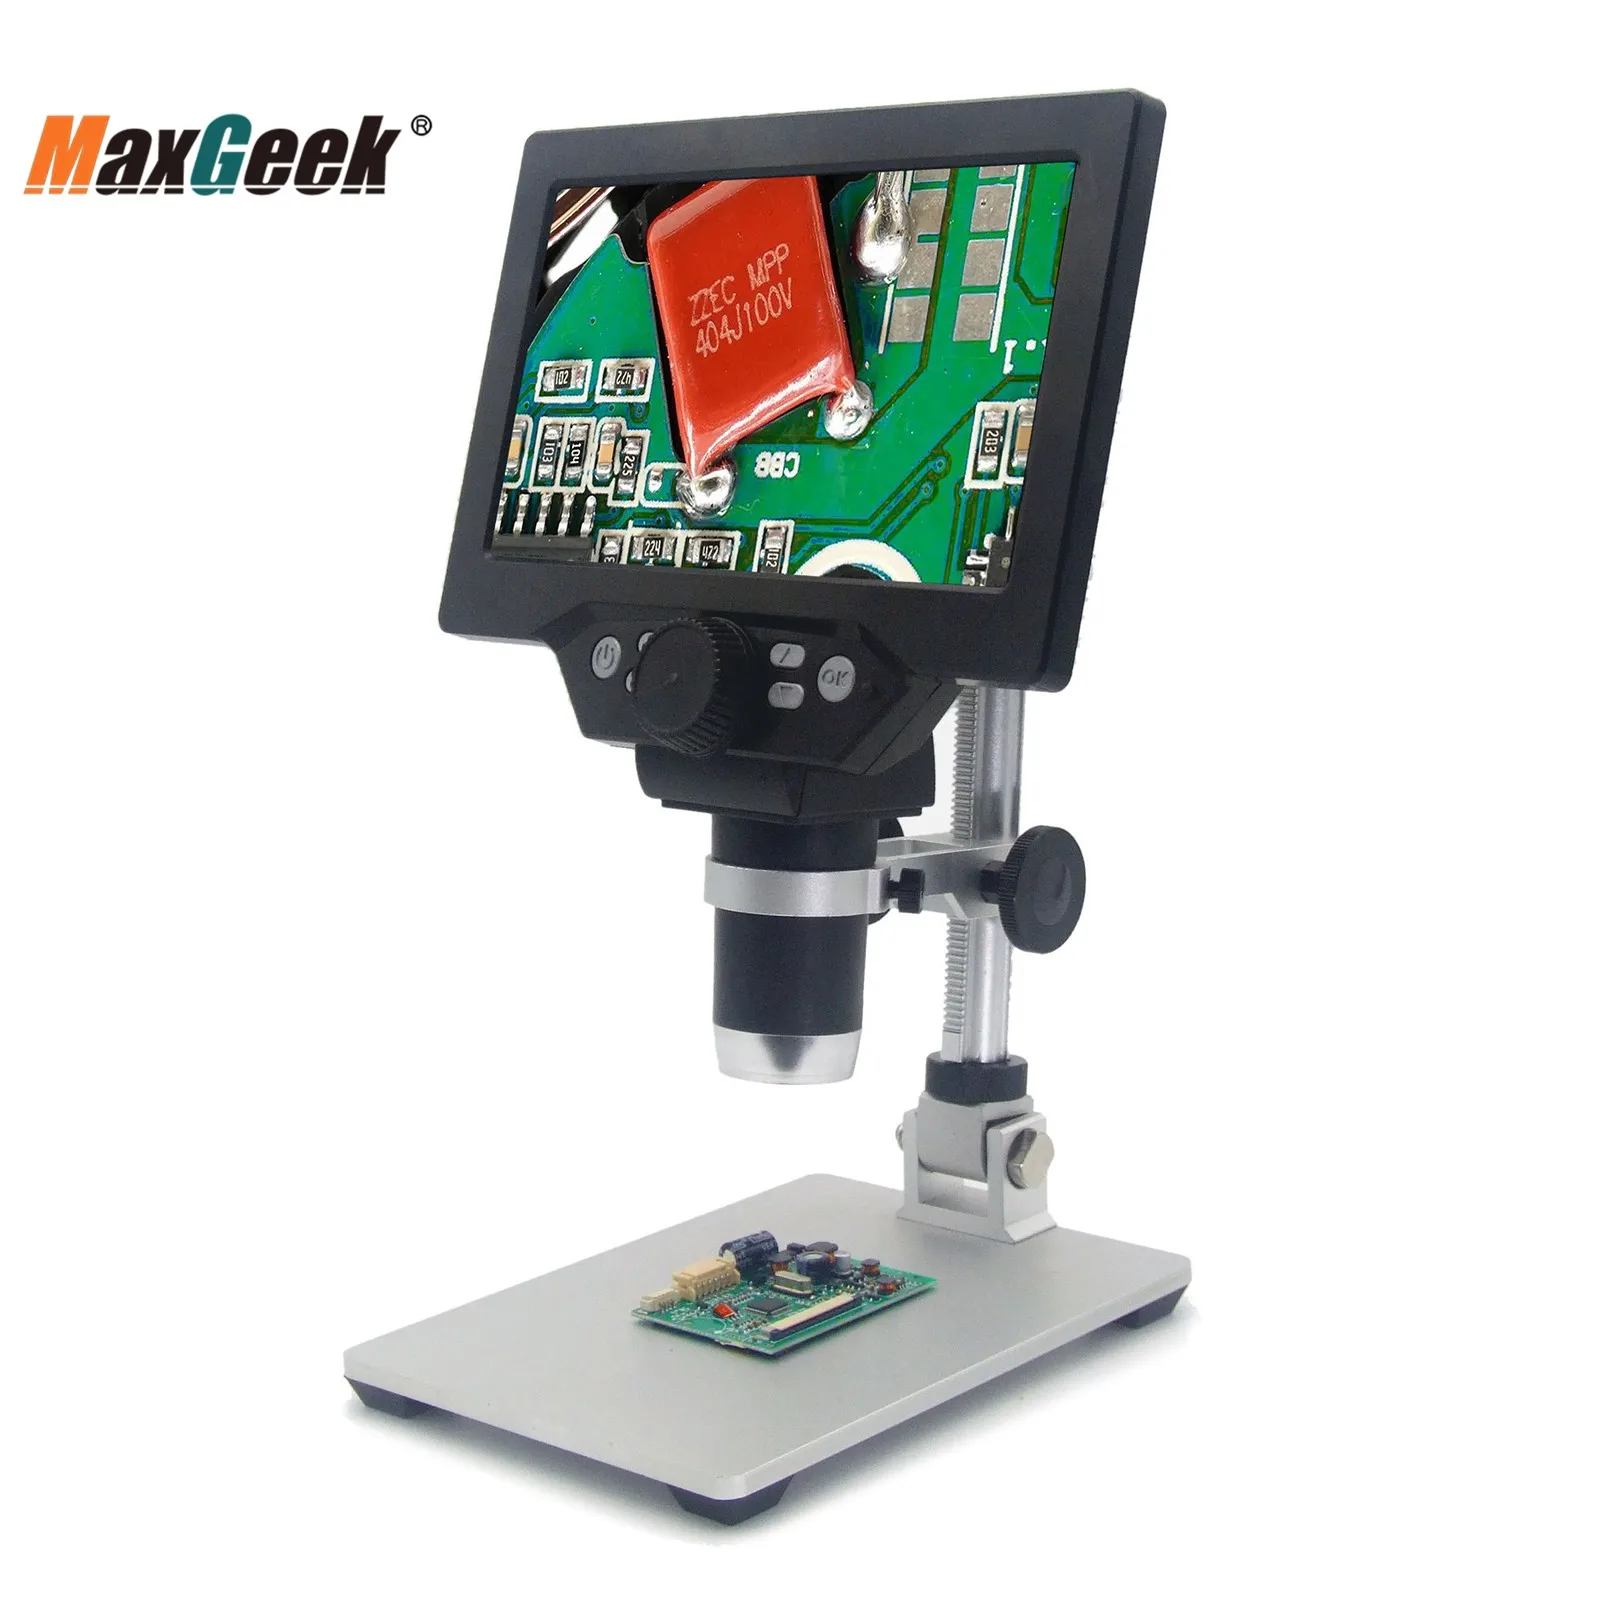 

Maxgeek Digital Microscope 12MP 1200X 1080FHD 7" LCD Display Adjustable Angle 8 LEDs G1200 Standard Version